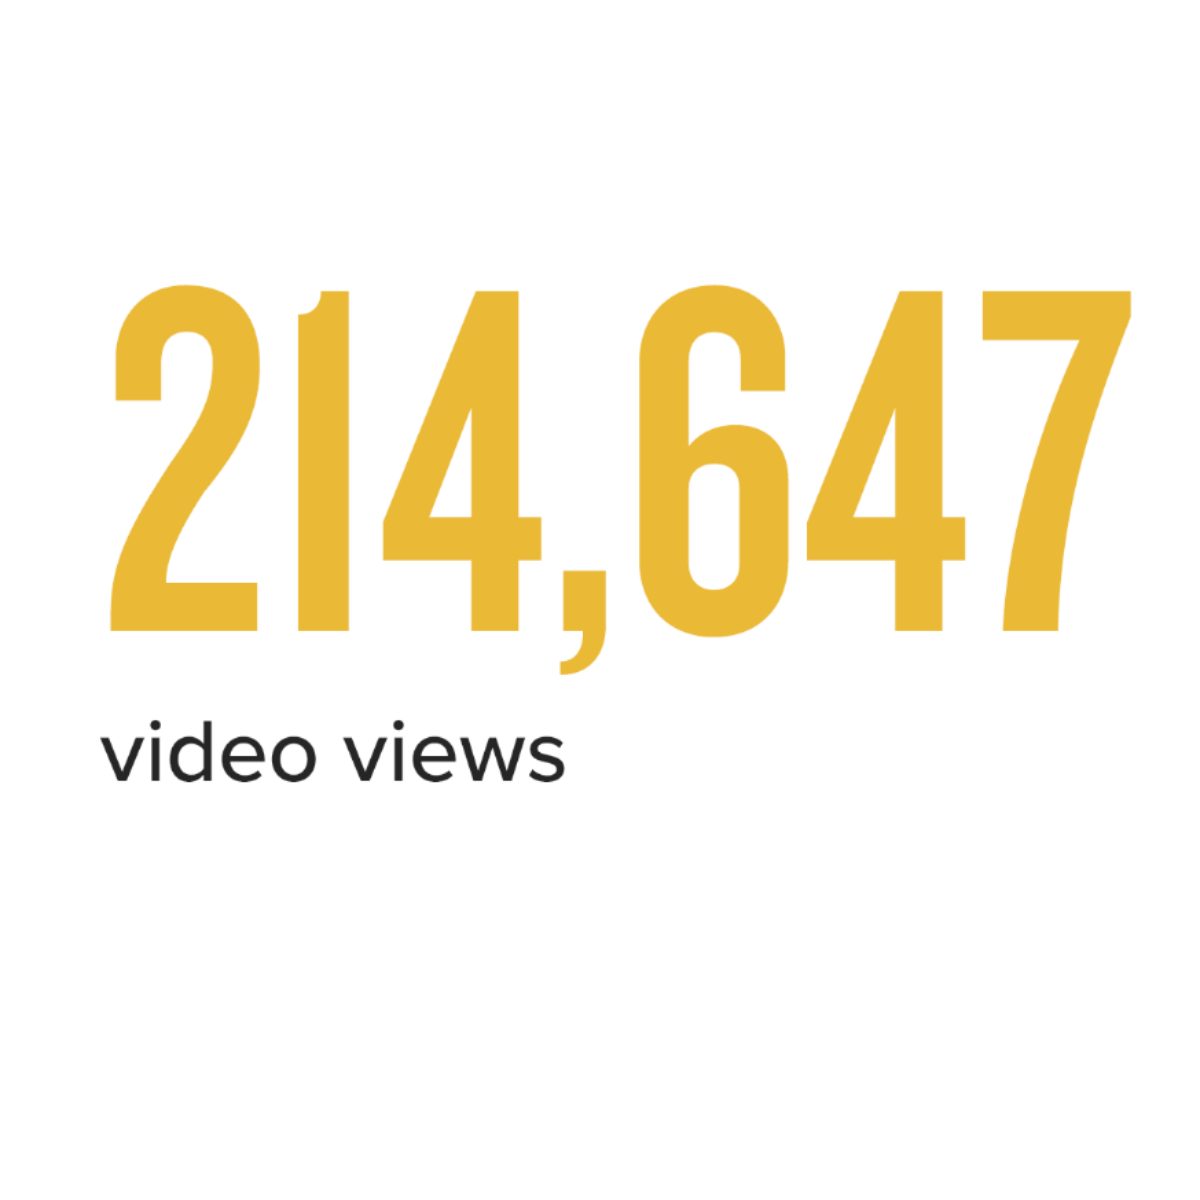 214,647 video views